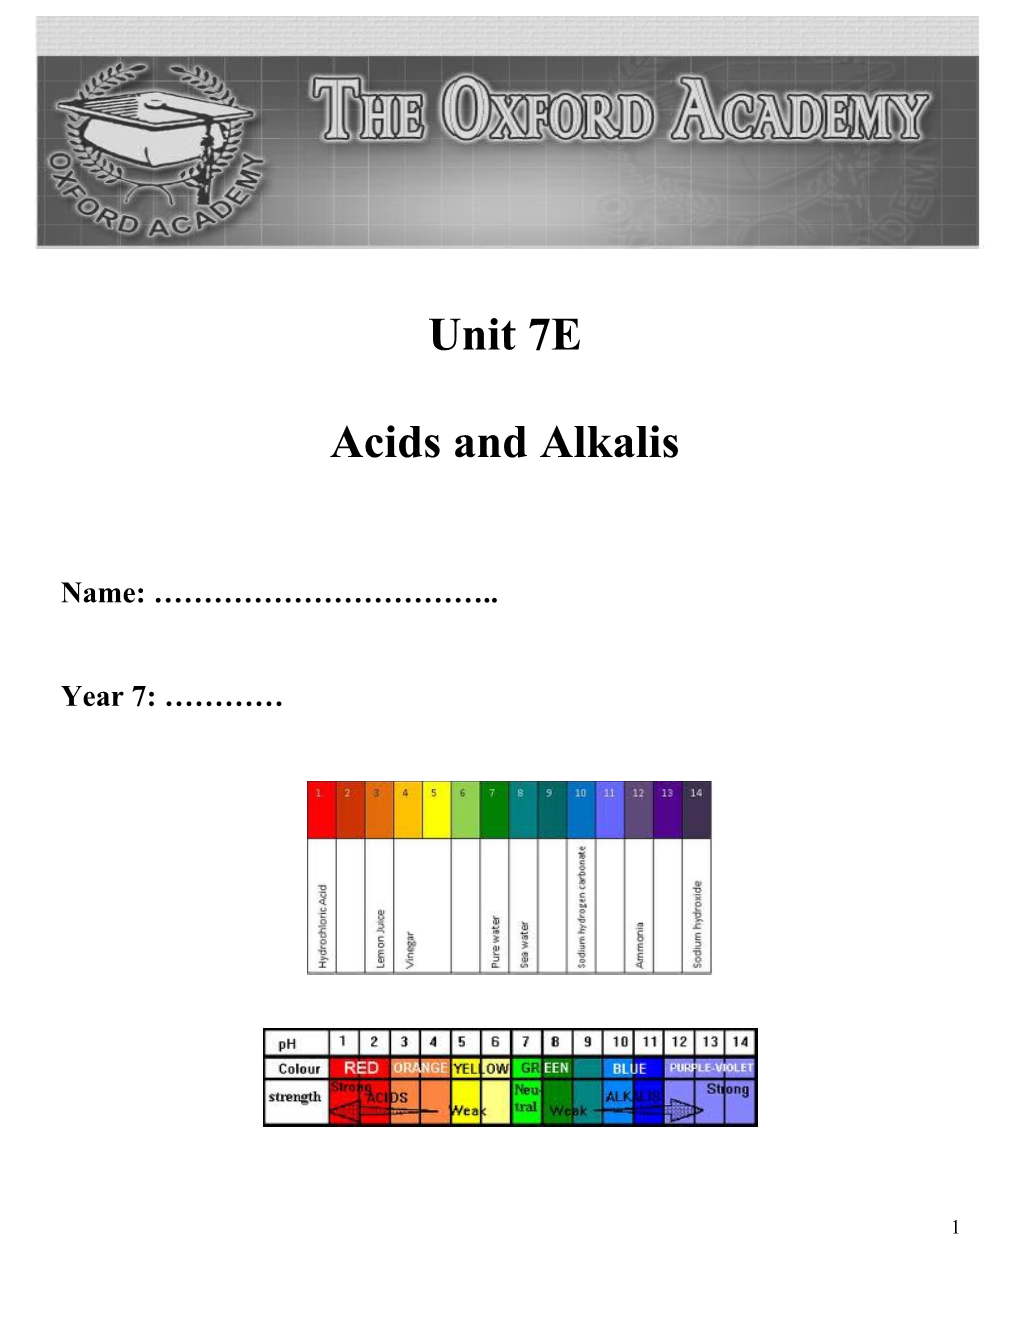 Unit 7 E: Acids and Alkalis